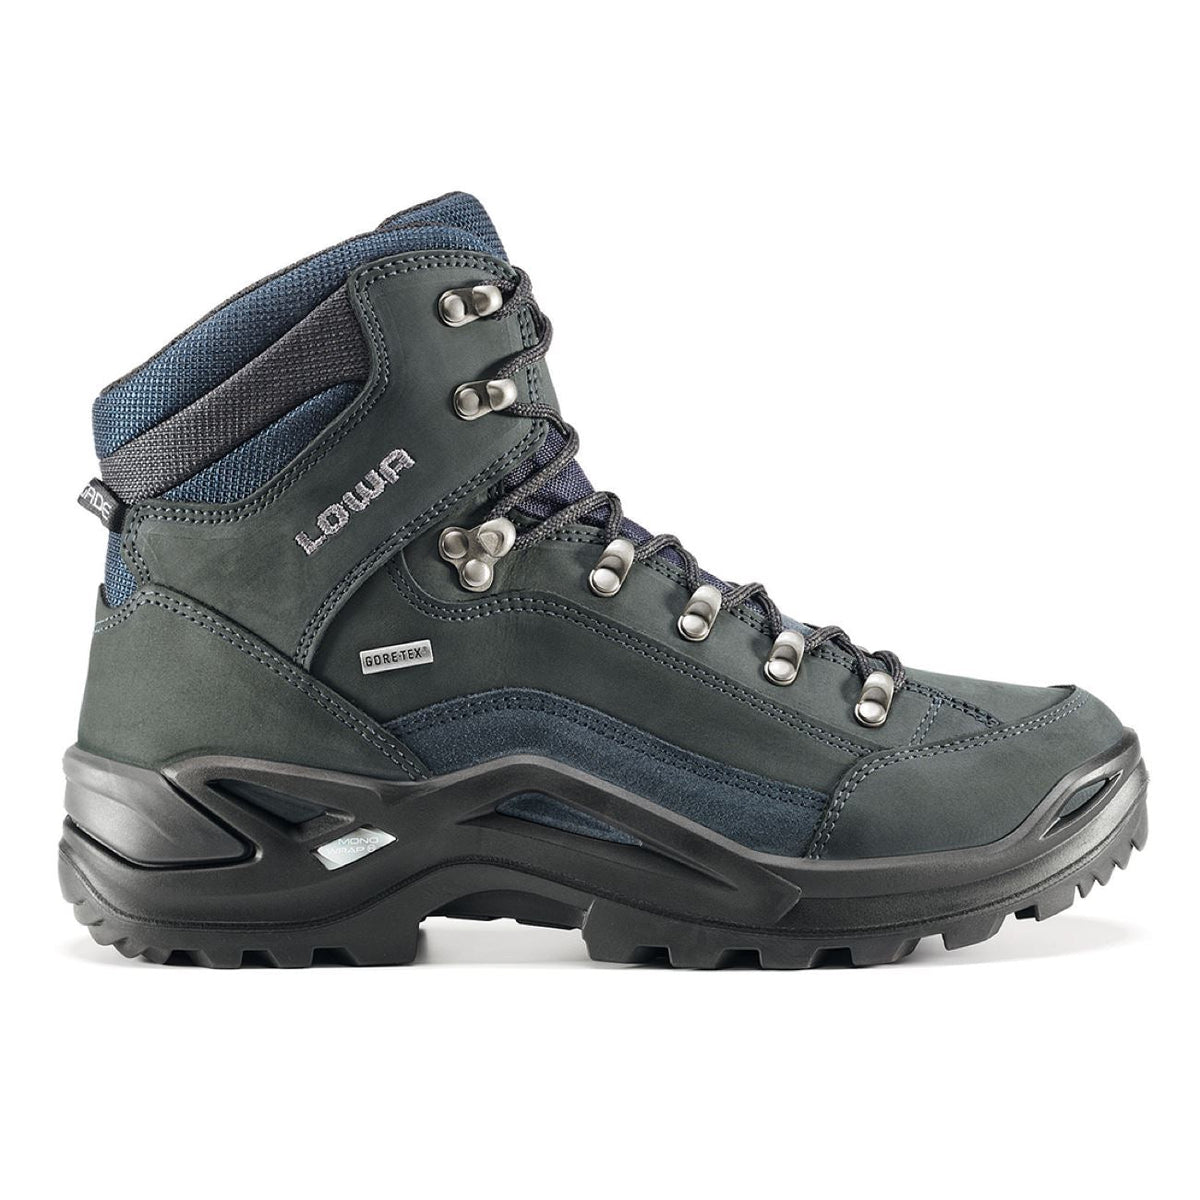 LOWA, Renegade GTX Mid, Wide, Dark Grey Hiking Boots LOWA Dark Grey 12UK 